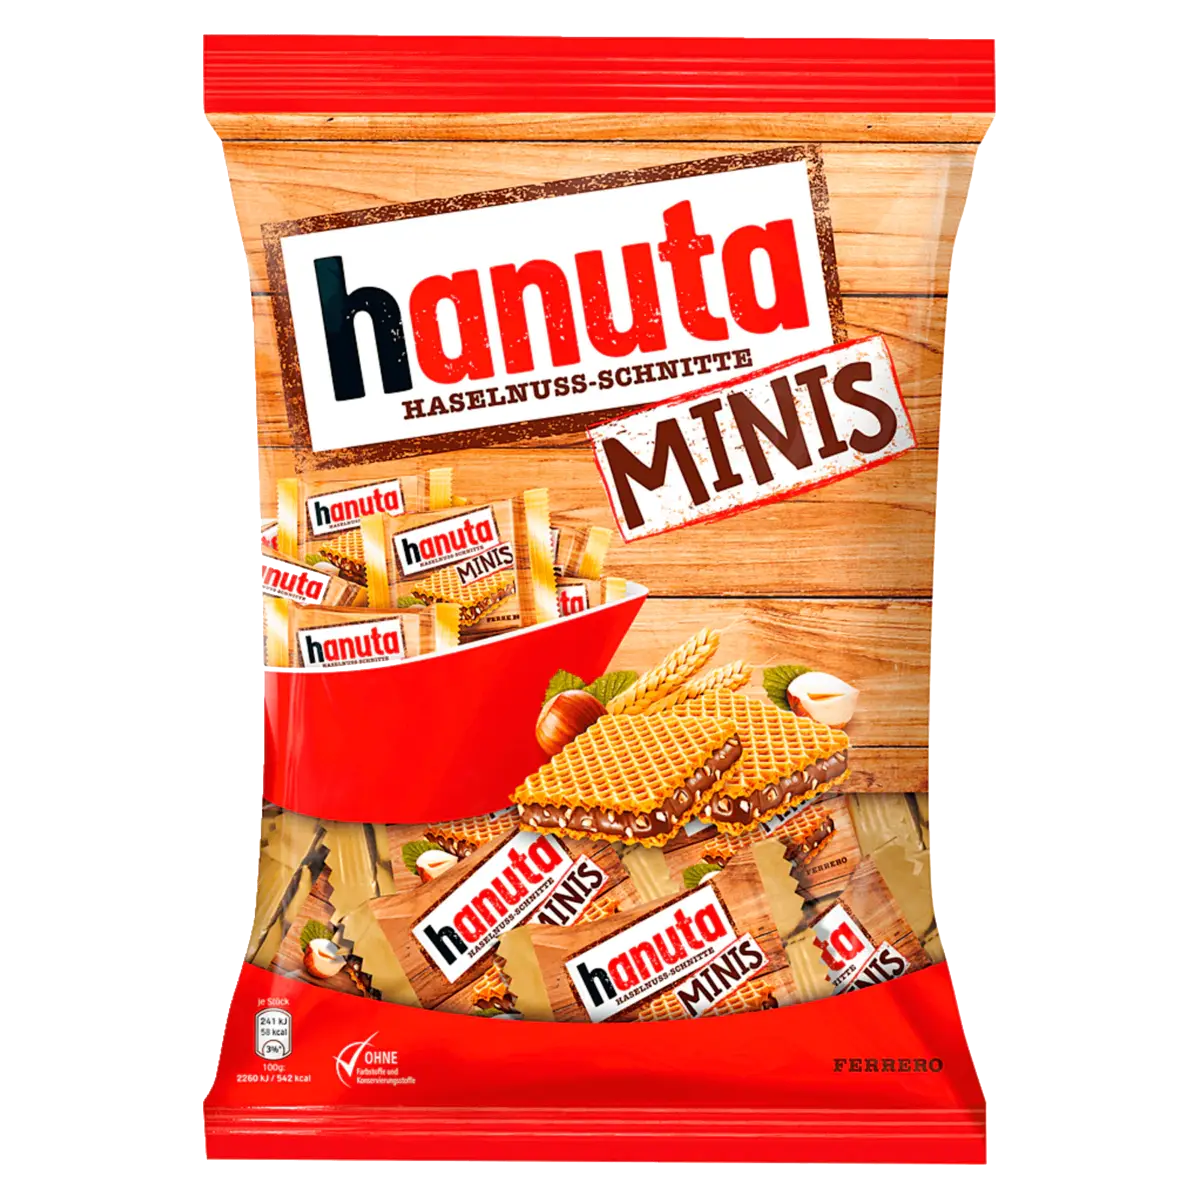 Hanuta Haselnuss-Schnitten Minis, 200 g